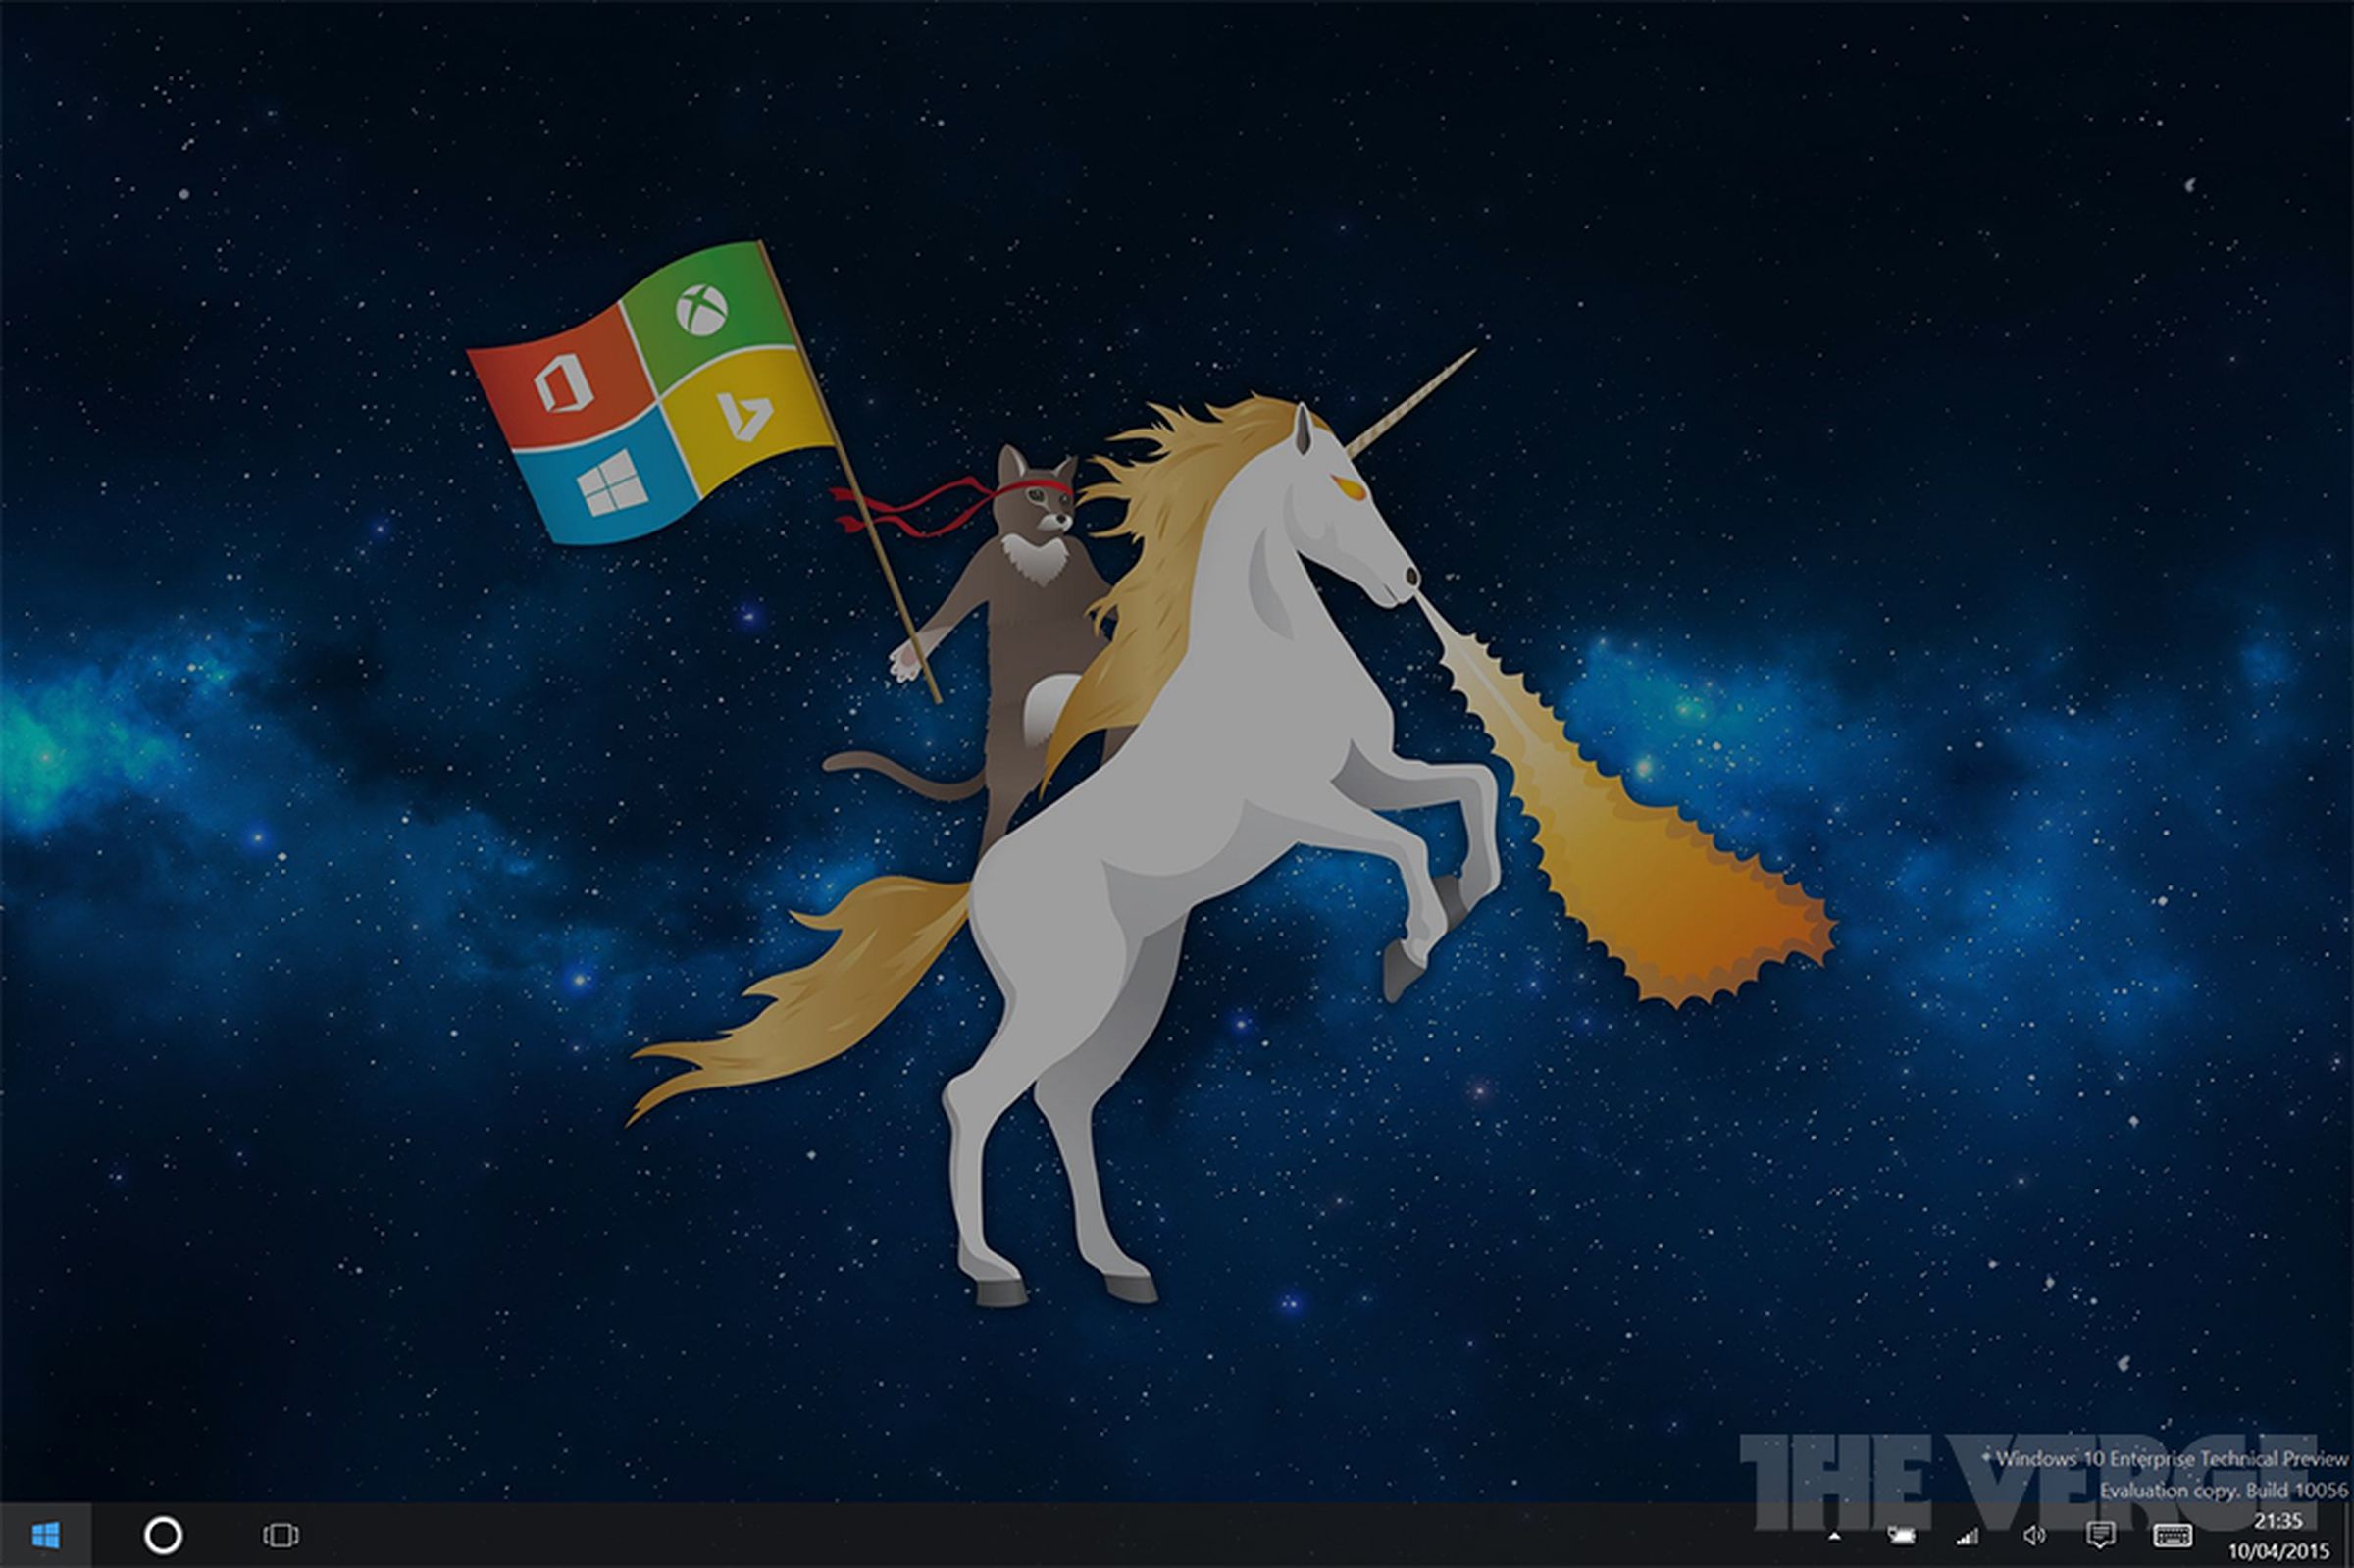 Windows 10 touch mode improvements